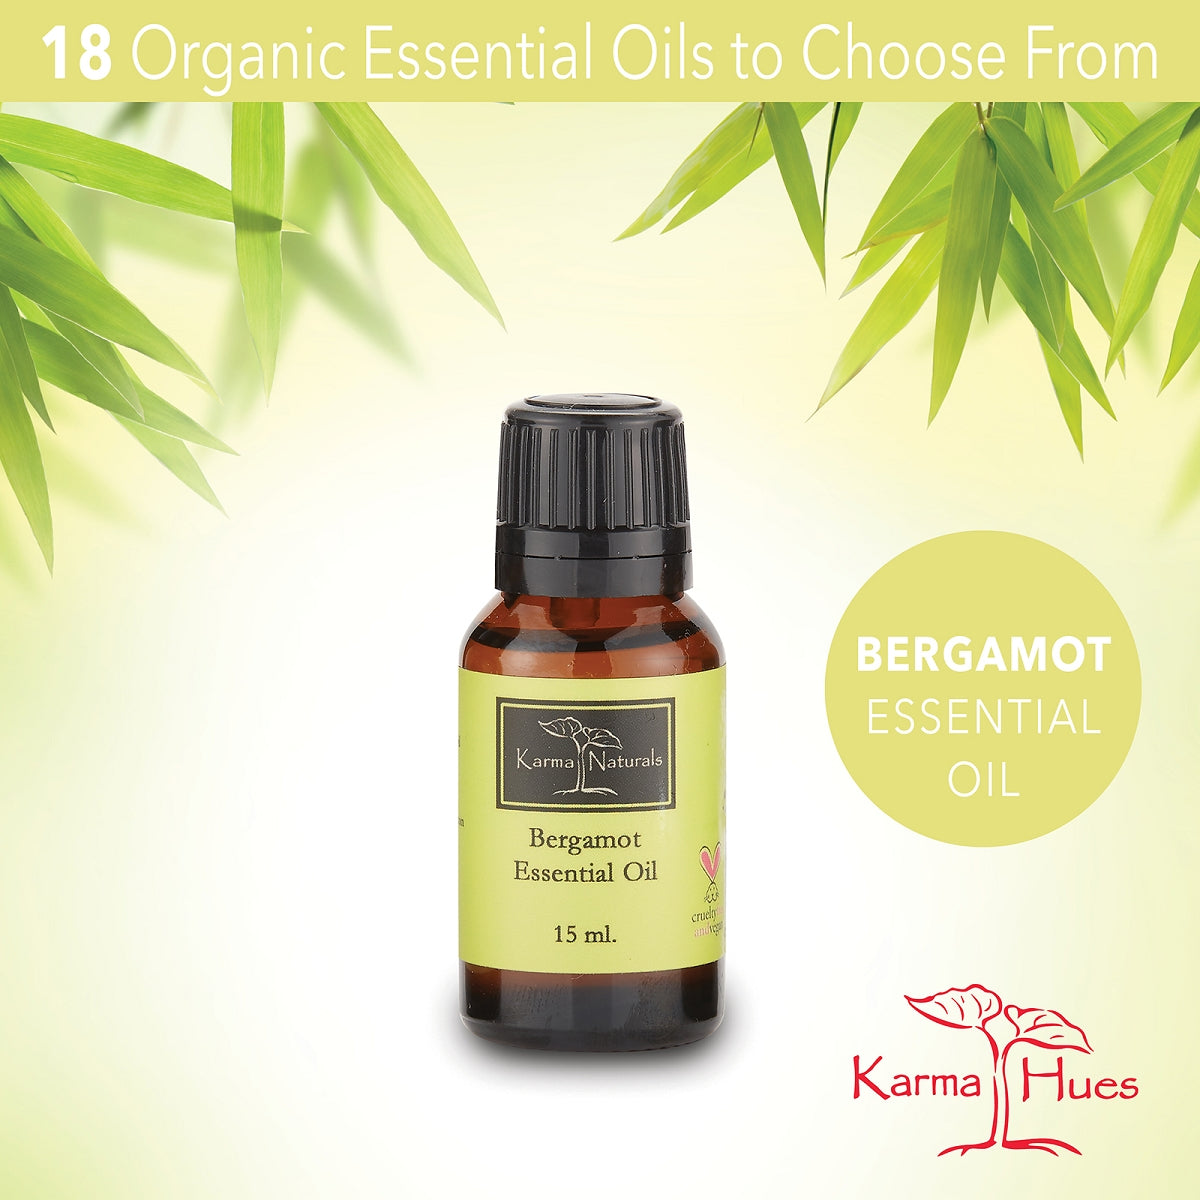 Karma Naturals Bergamot Essential Oil